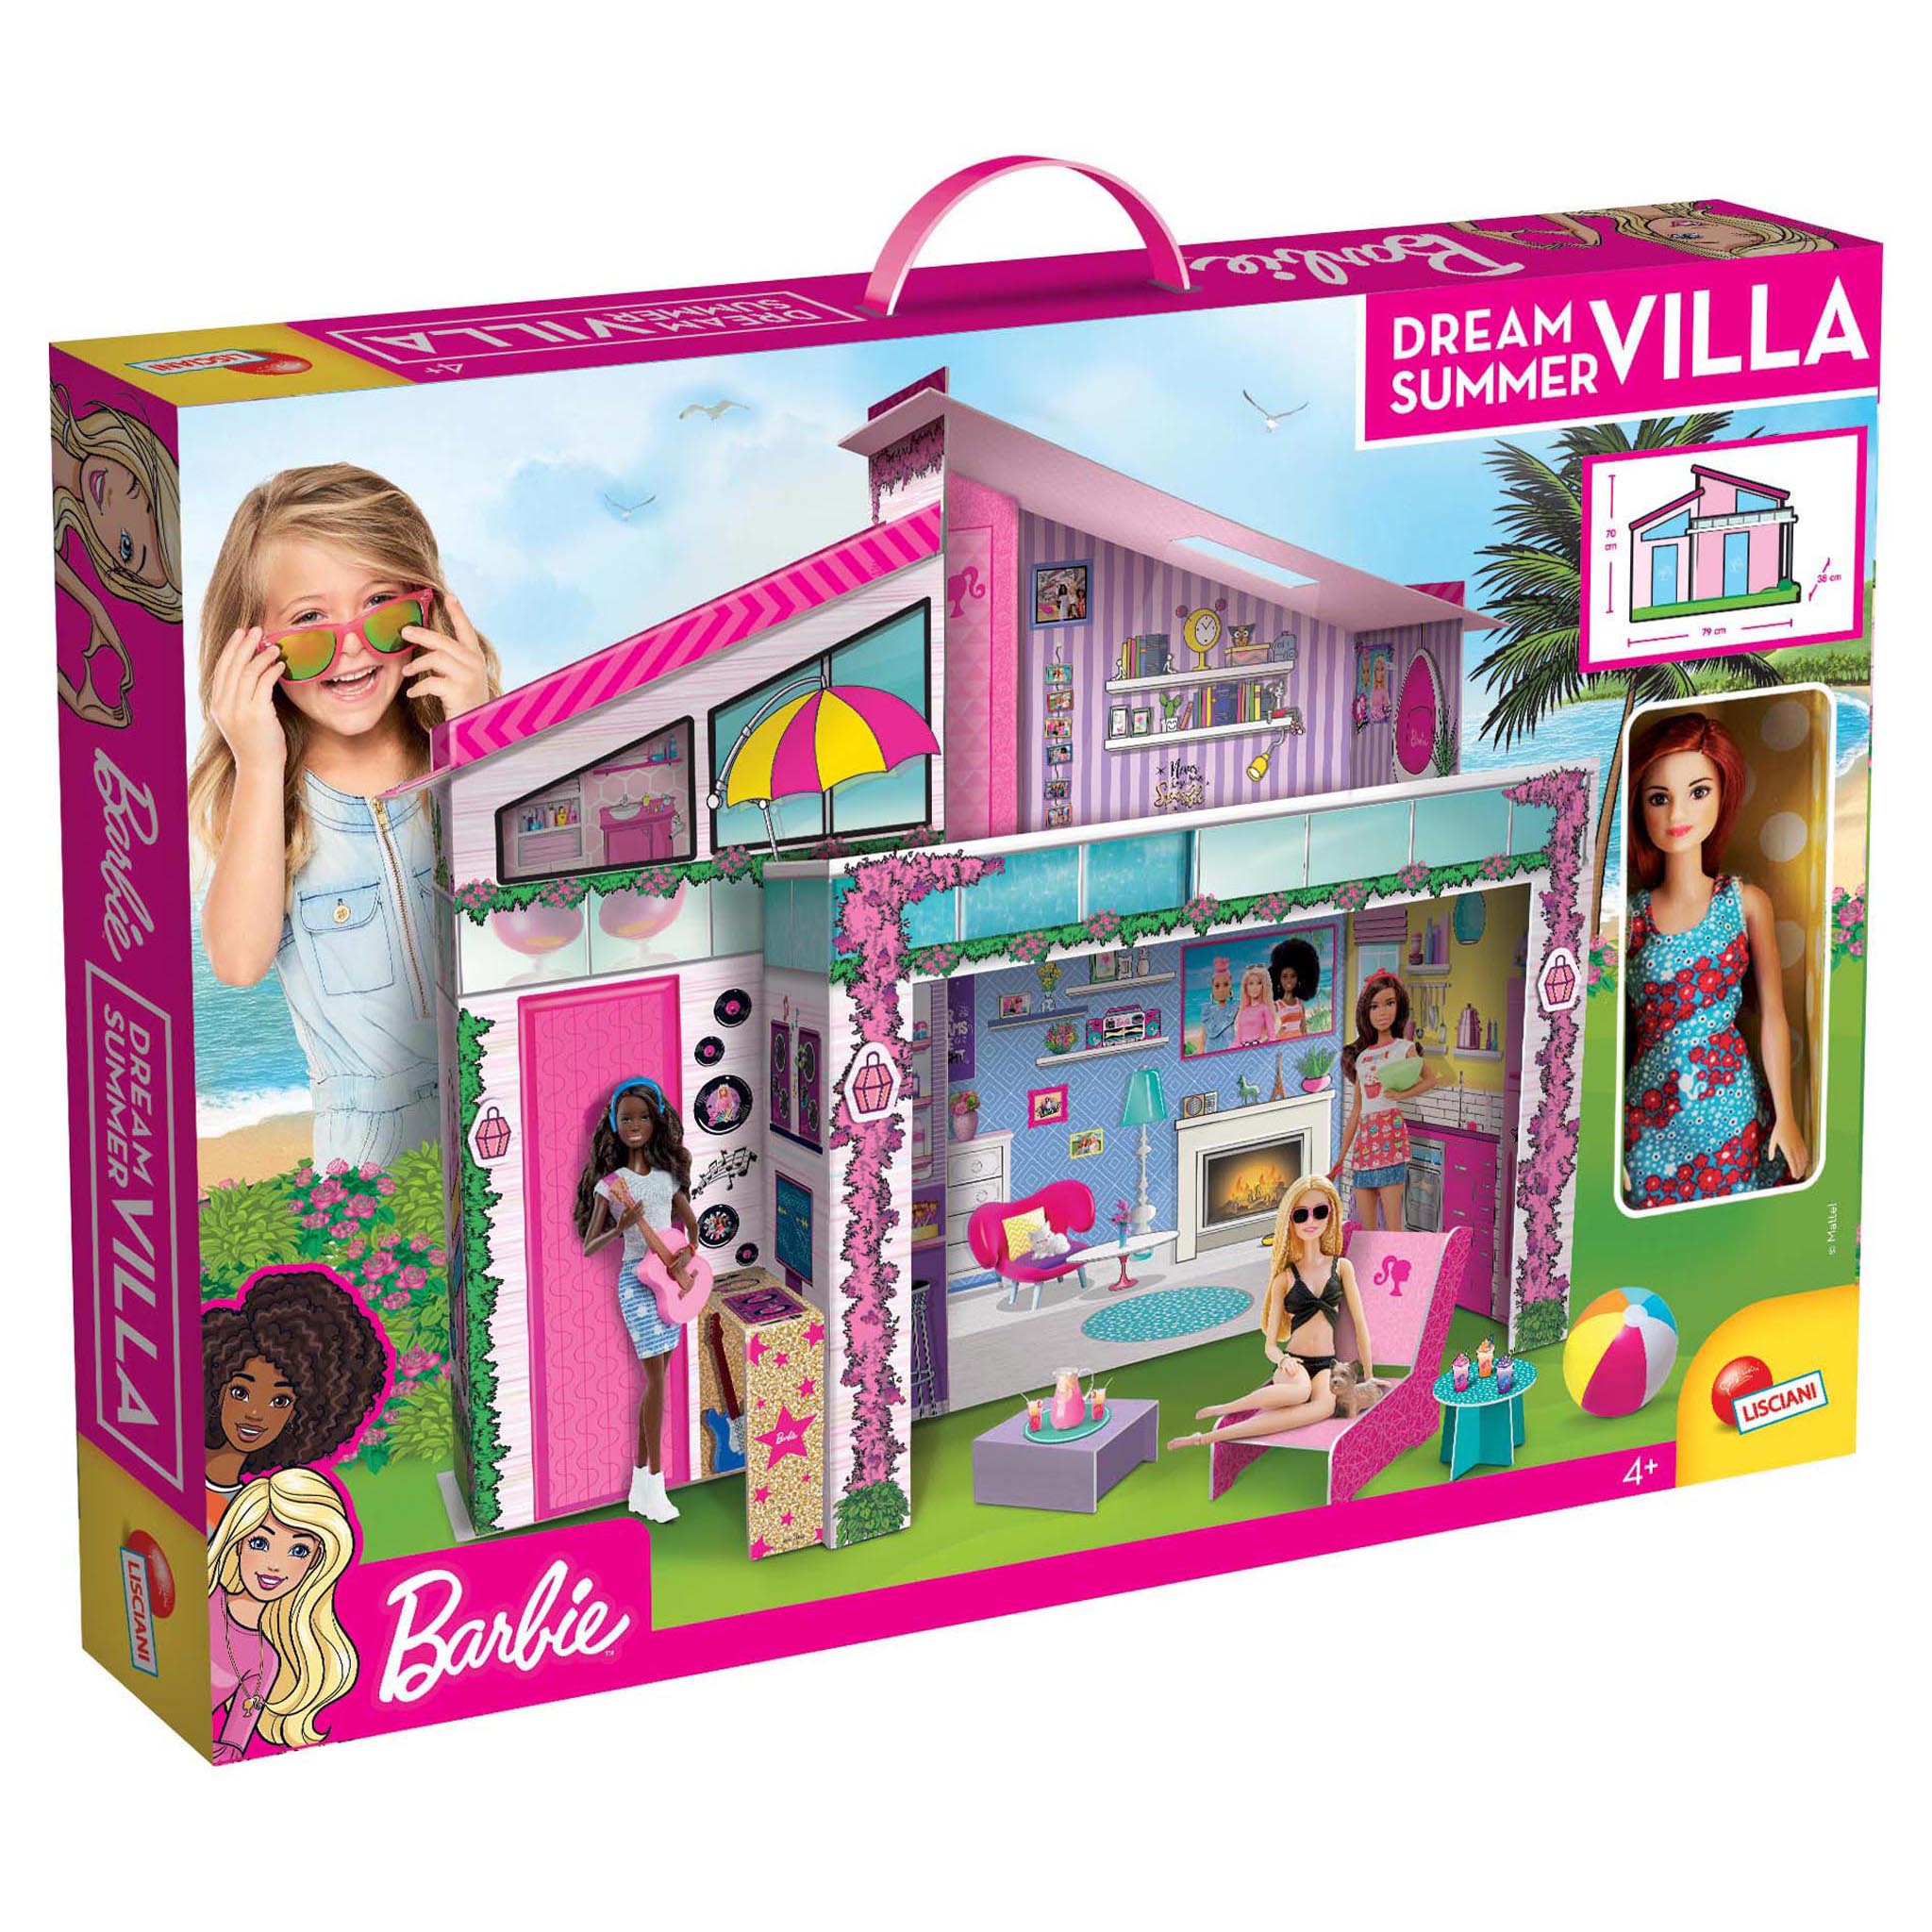 Большой набор кукол. Barbie кукольный домик "летняя вилла" 76932. Домик для кукол Барби Дрим Хаус. Домик Барби Малибу вилла. Набор Barbie дом мечты, grg93.